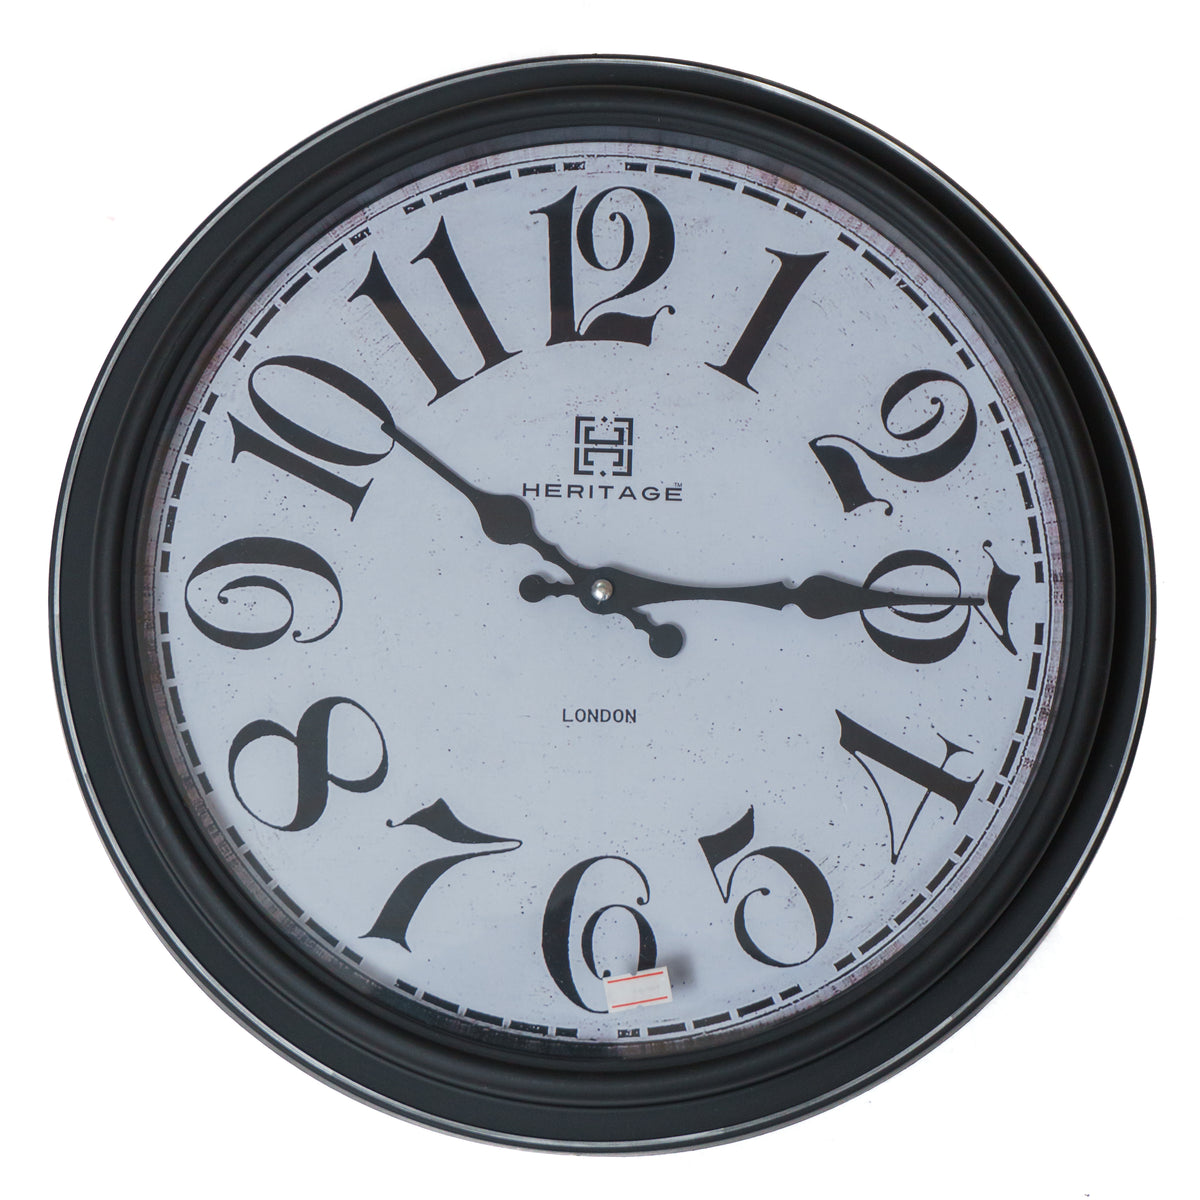 Heritage London Wall Clock: Decimal Numbers, Round Shape, Long Needles